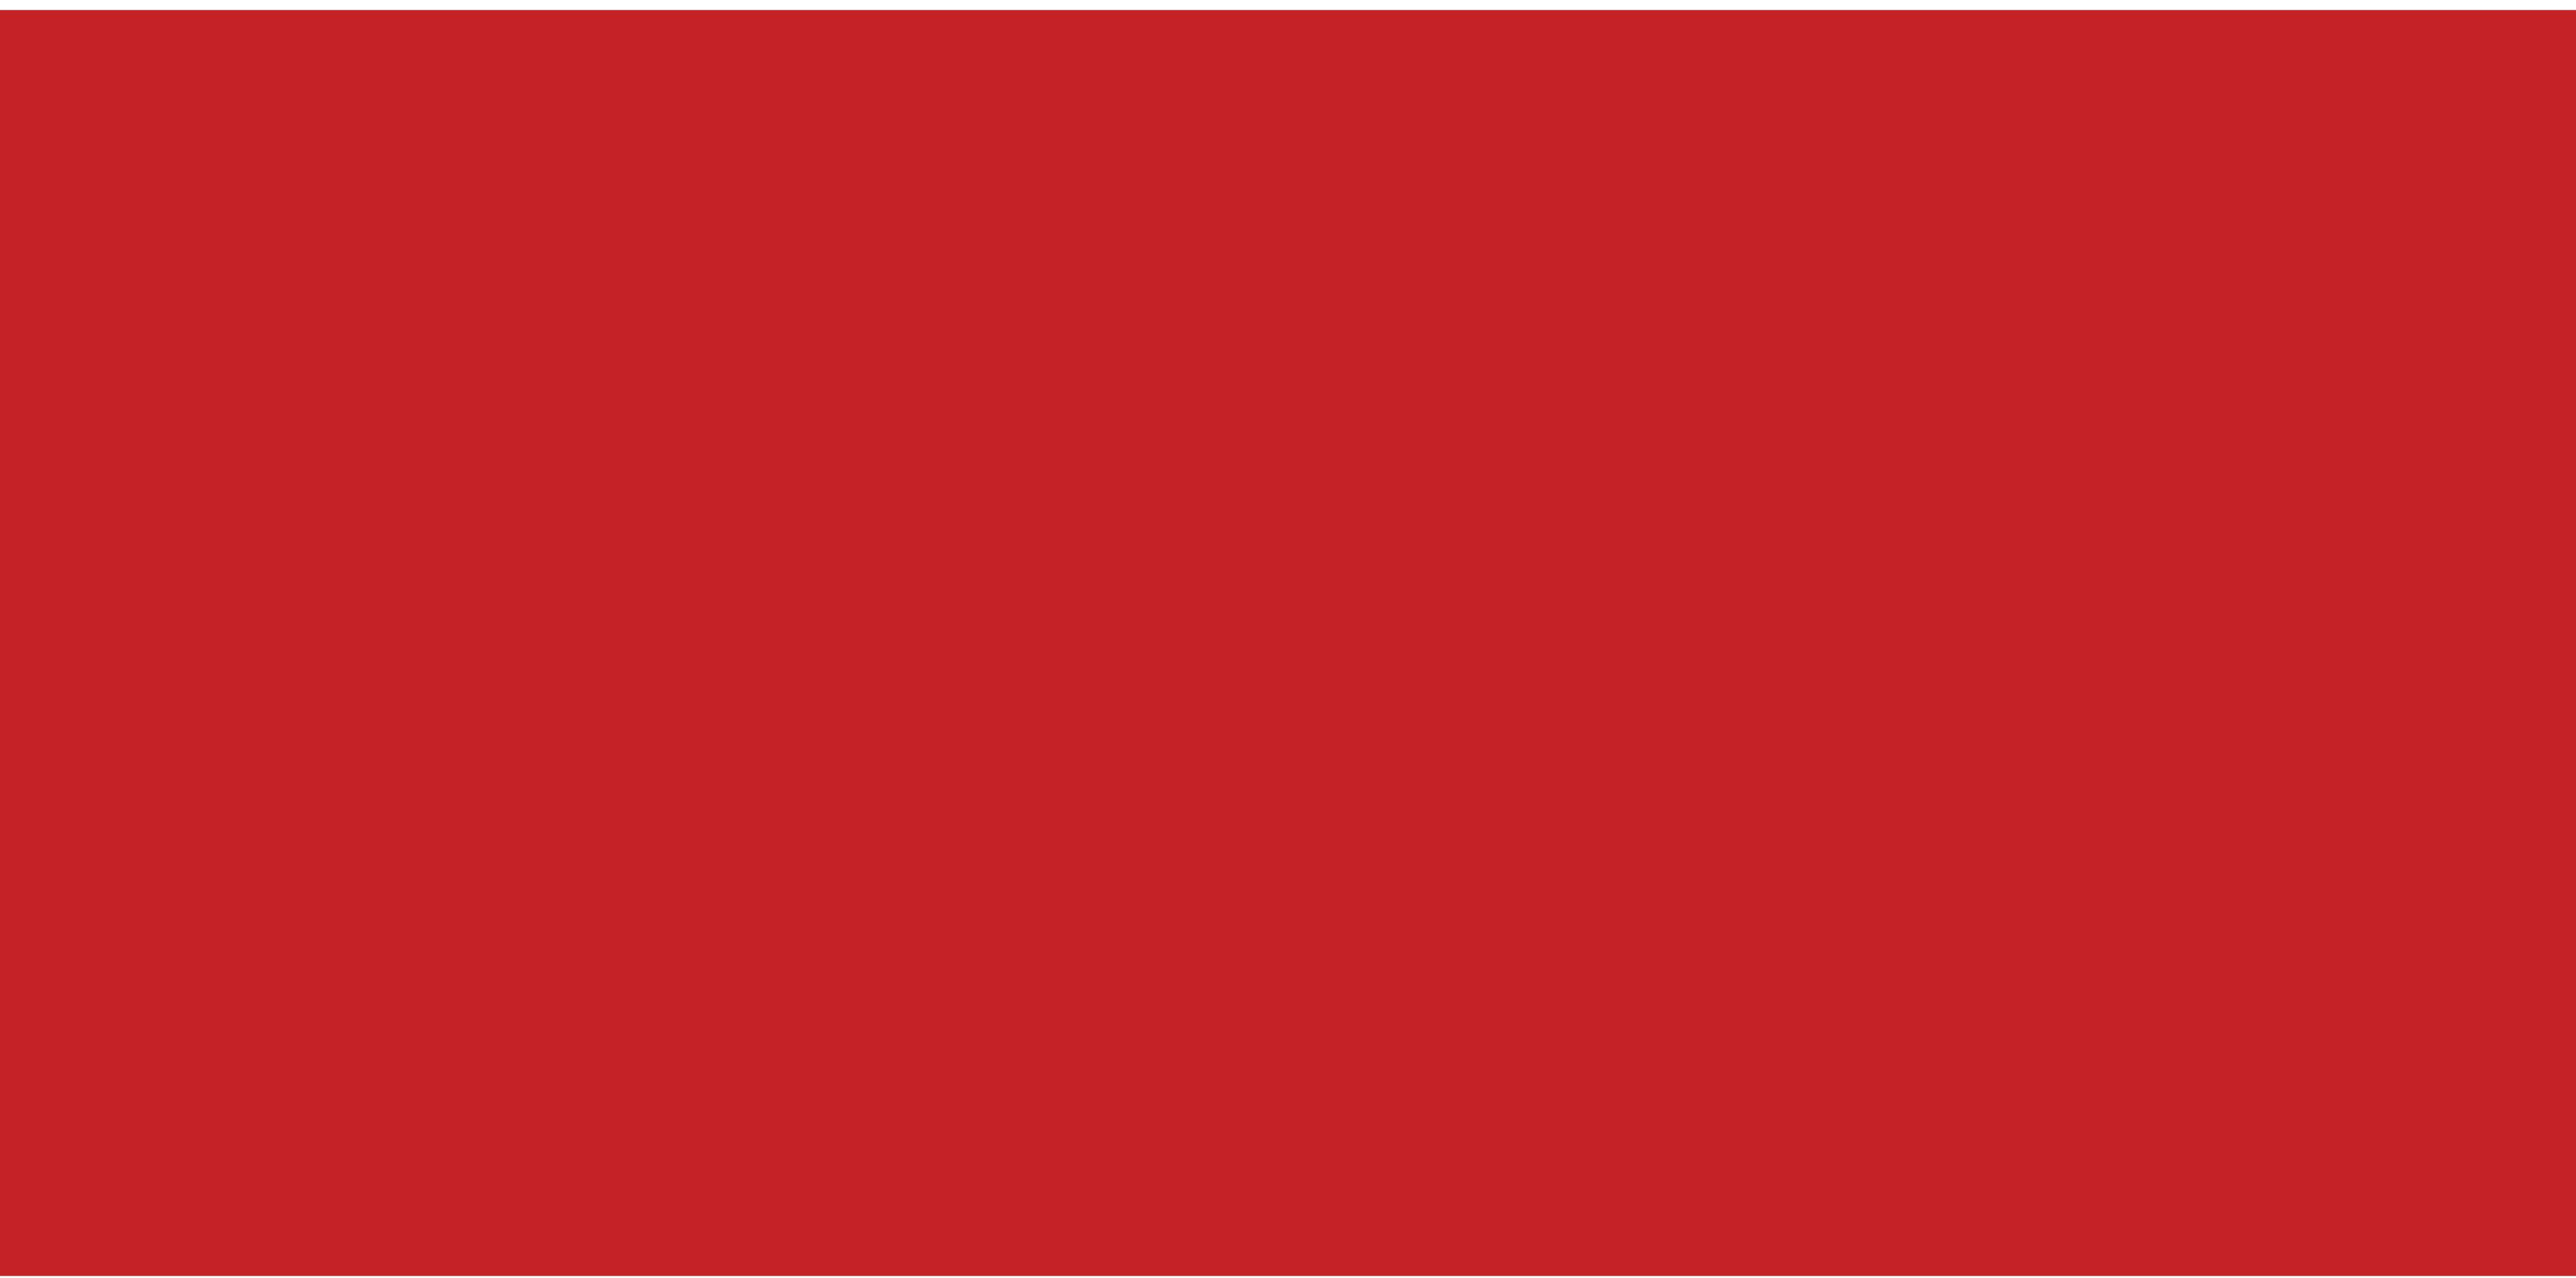 Red hex. Керамогранит красный матовый. D-C-Fix 0.45х15.0м. D-C-Fix 15х0.45м пленка самоклеящаяся Уни мат бежевый. Картинки фон красный мат.